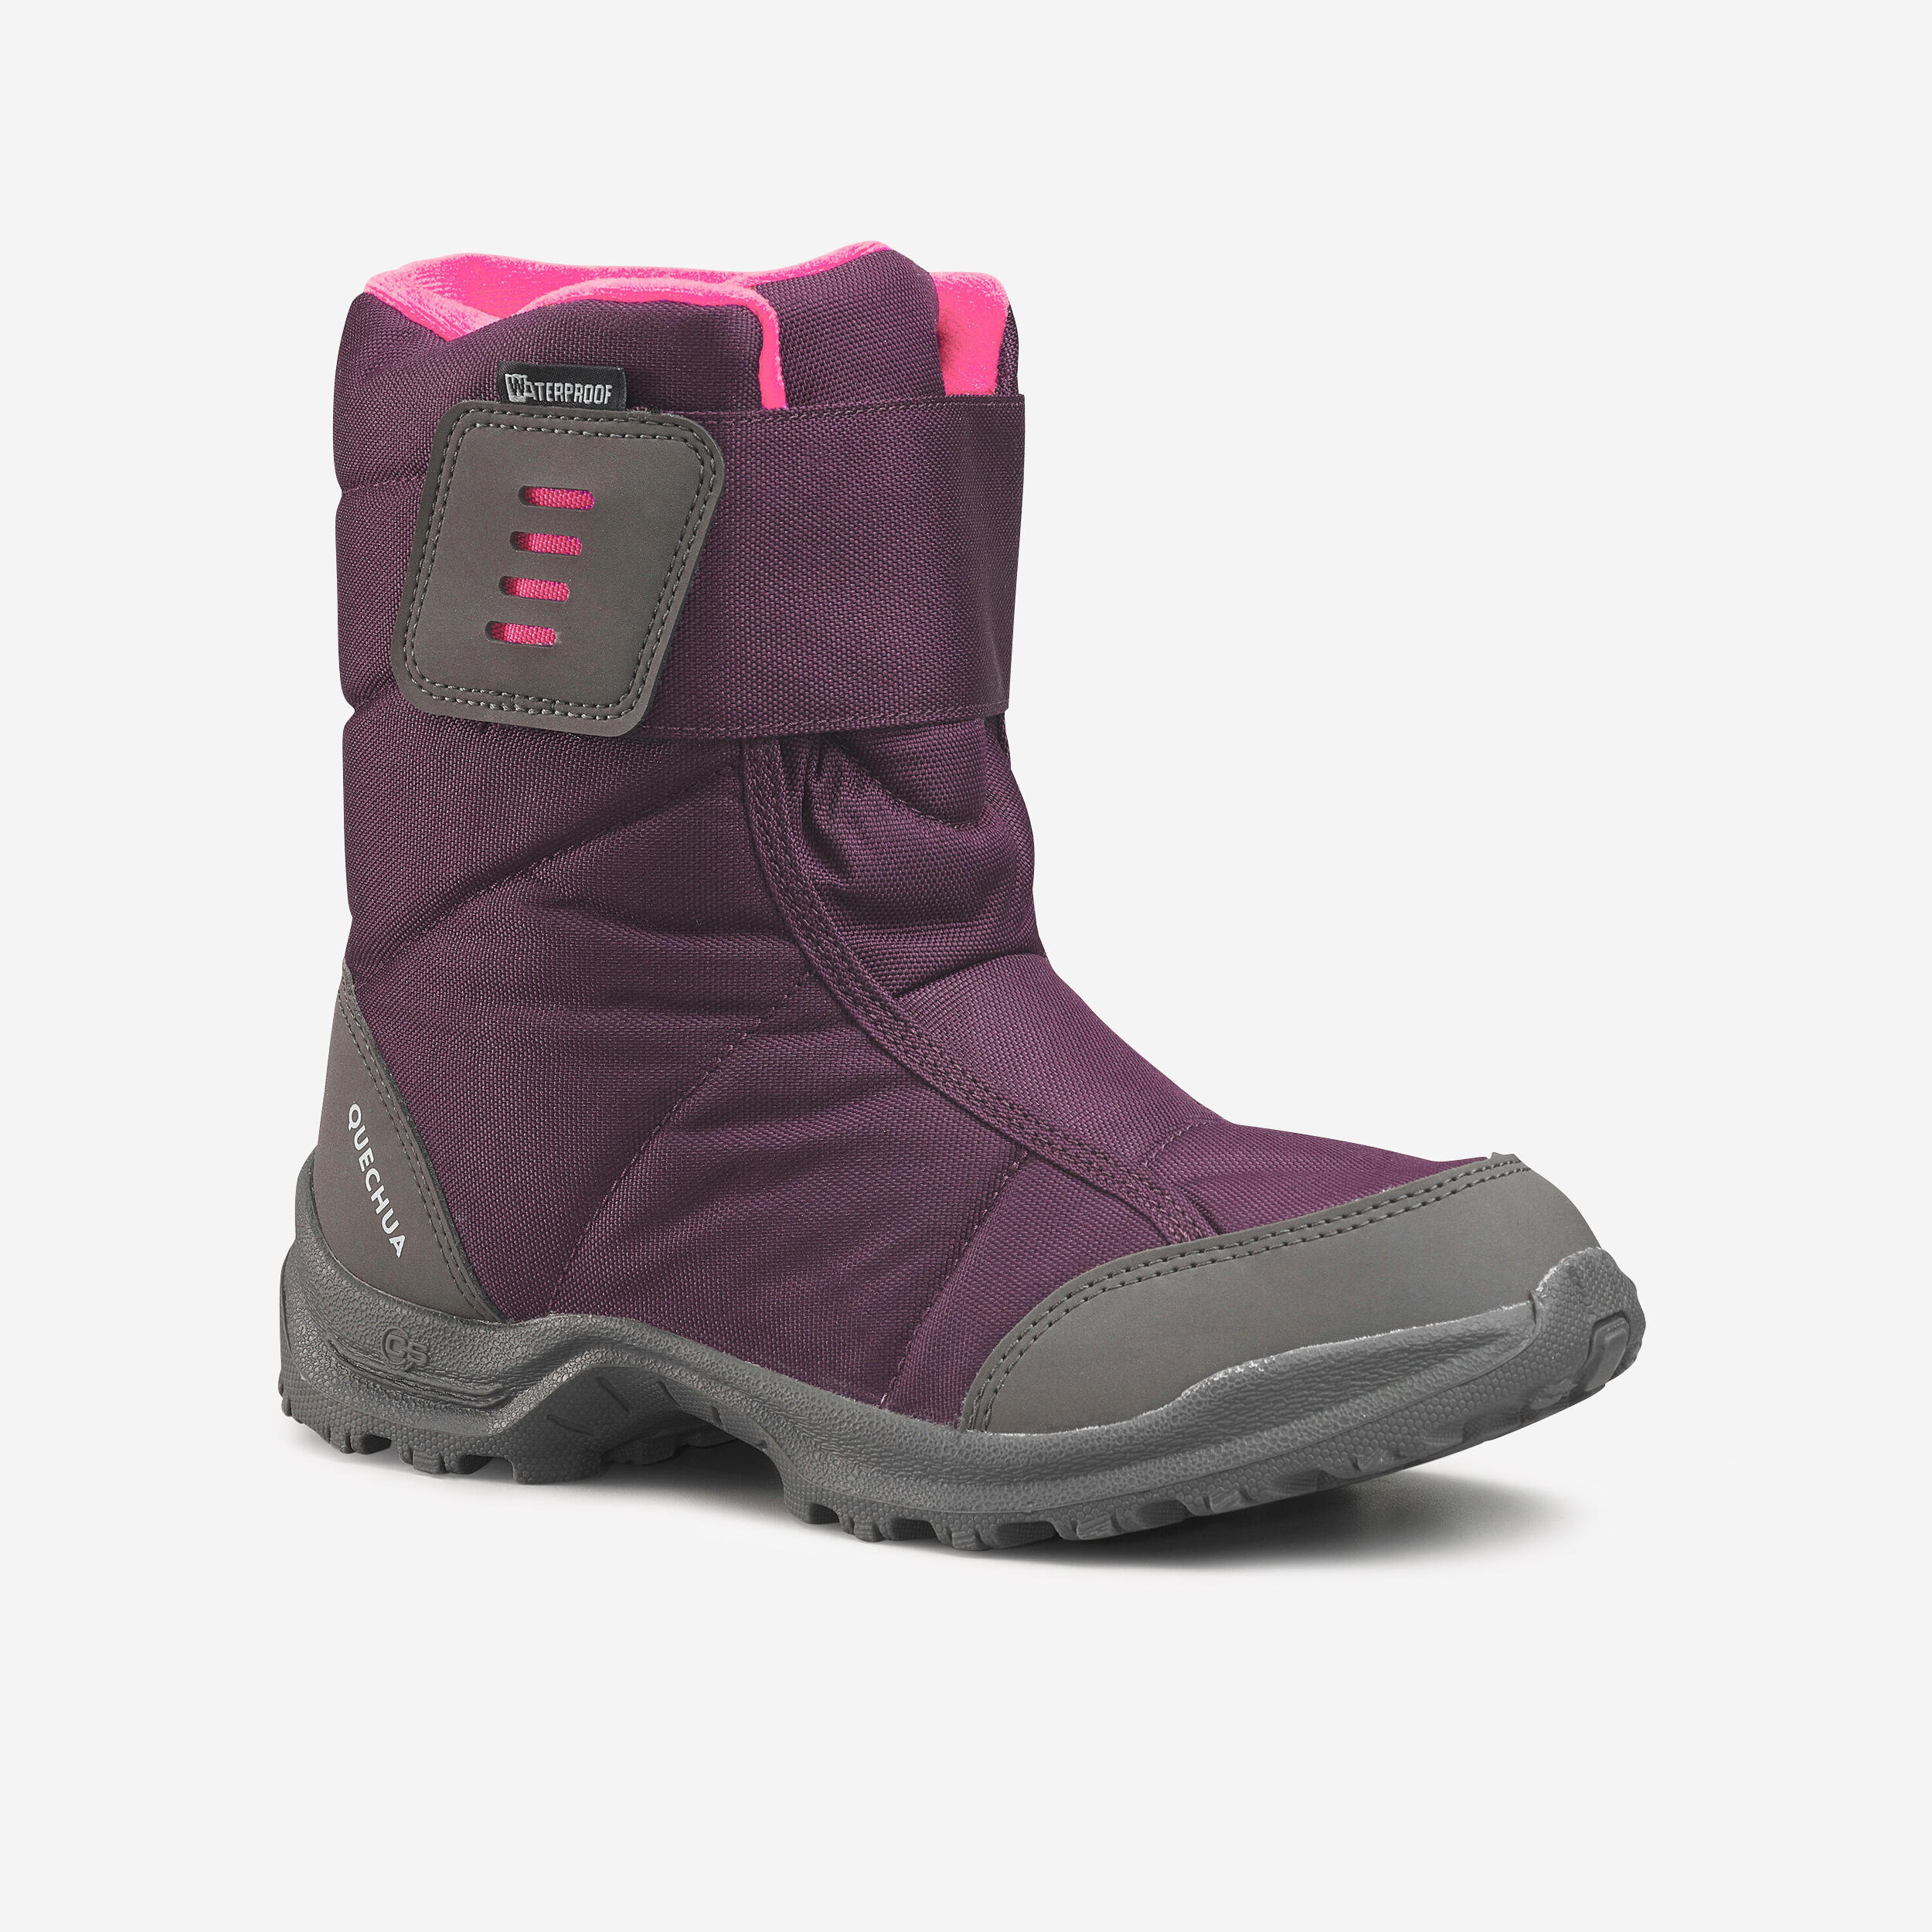 QUECHUA Kids’ warm waterproof snow hiking boots SH100 - Velcro Size 7 - 5.5 